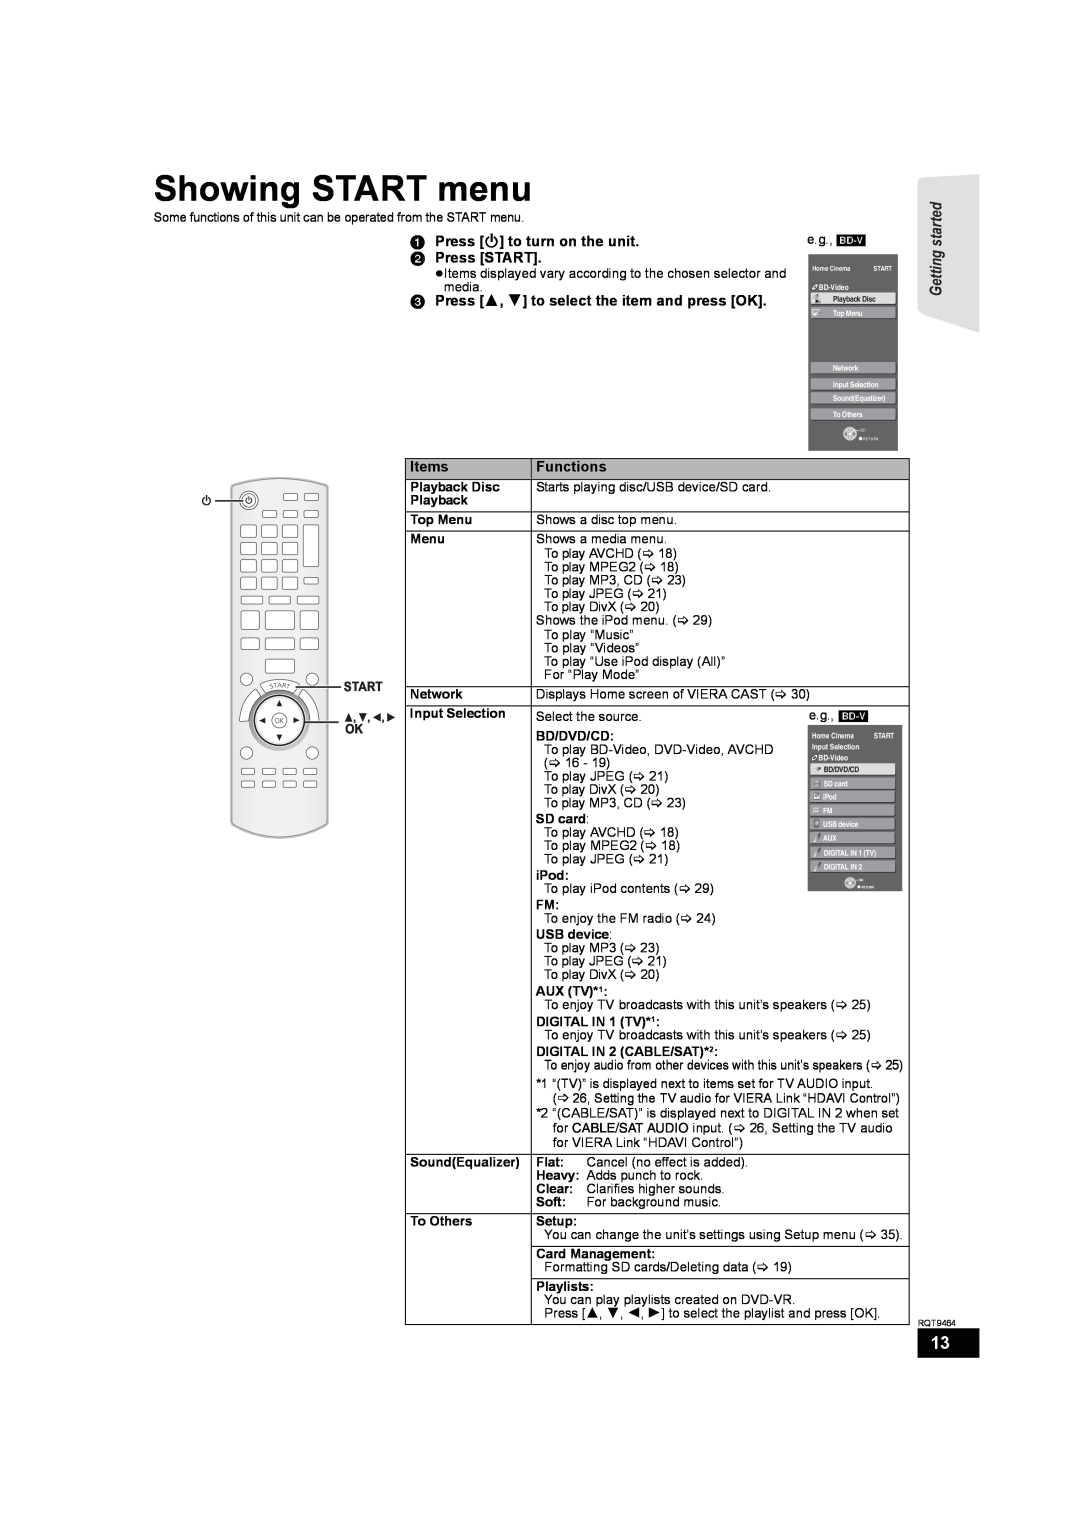 Panasonic SC-BTX70 manual Showing START menu, 1Press Í to turn on the unit 2 Press START, Items, Functions, Getting started 